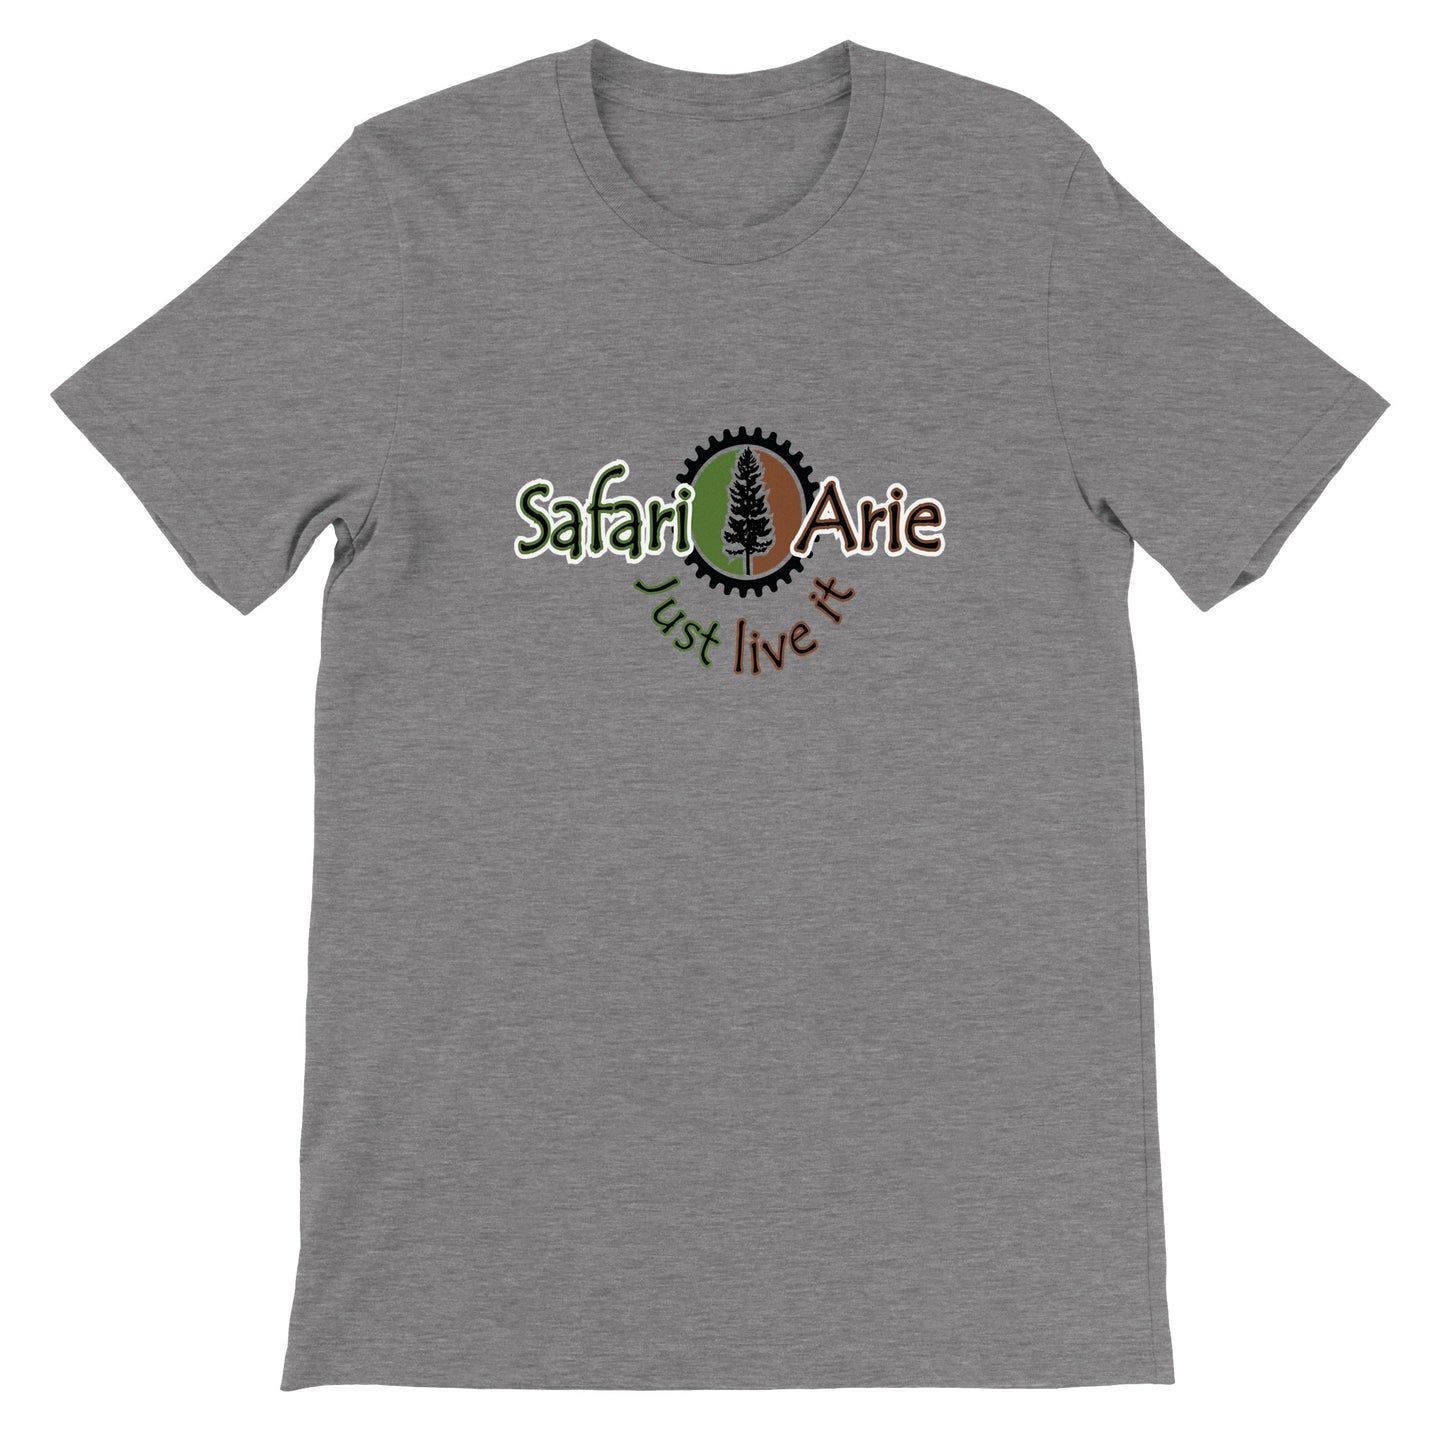 Safari Arie tree logo unisex t-shirt